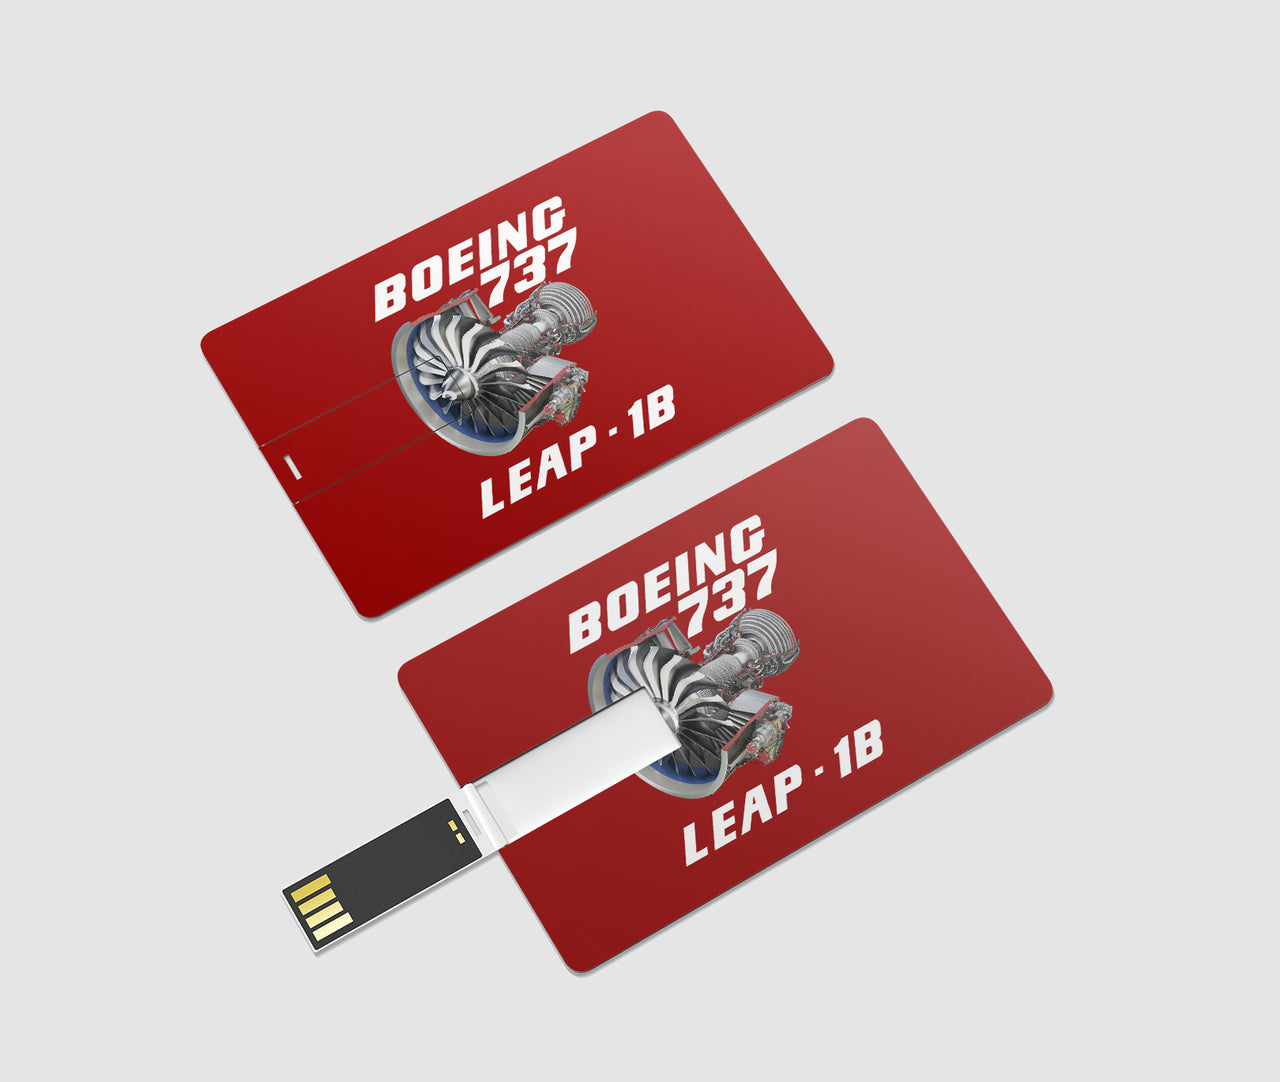 Boeing 737 & Leap 1B Designed USB Cards